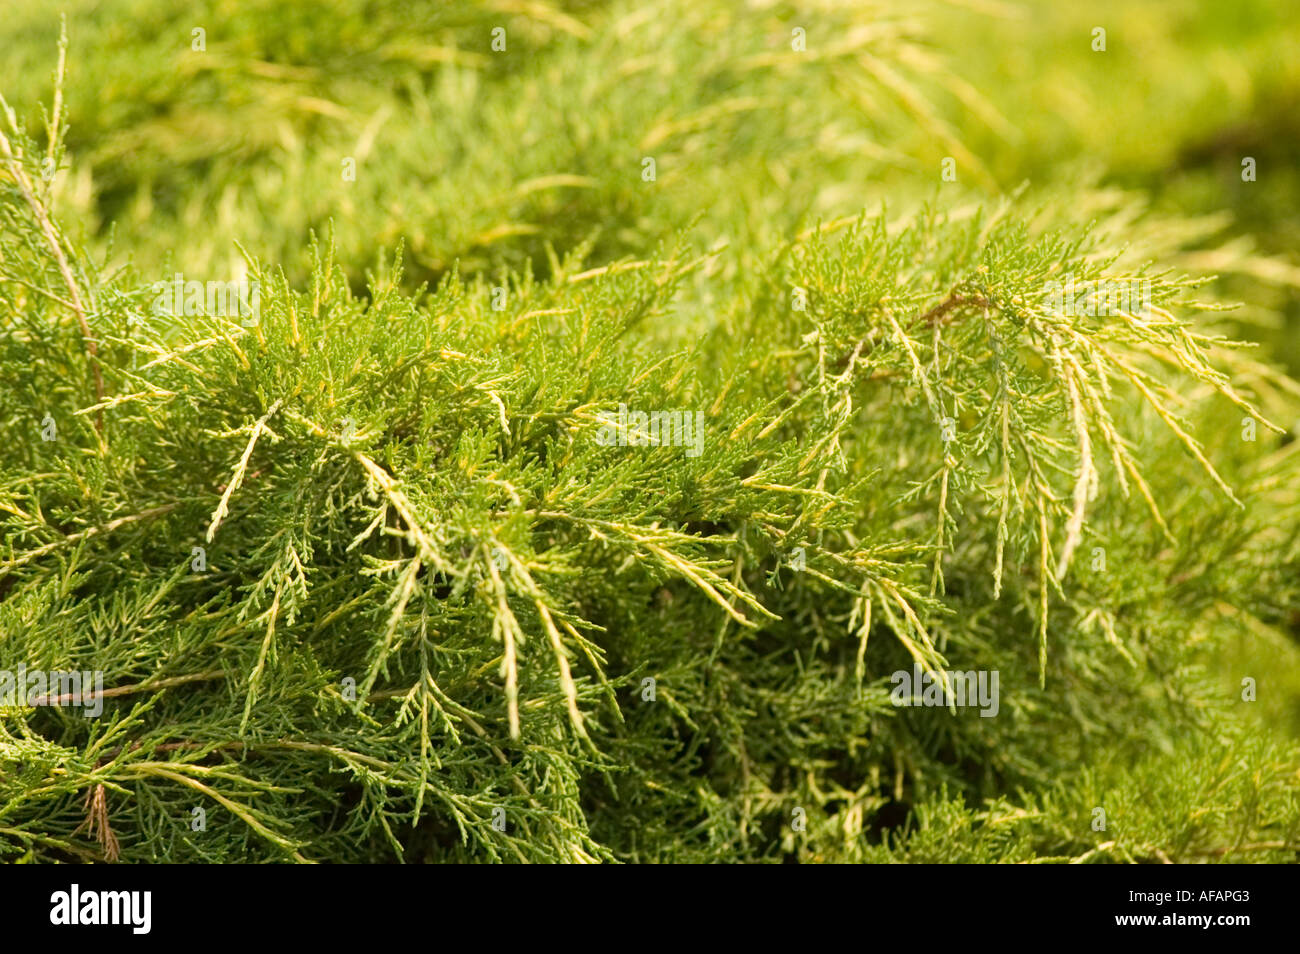 Chinese Hybrid Juniper Cupressaceae Juniperus x media Pfitzeriana aurea Stock Photo